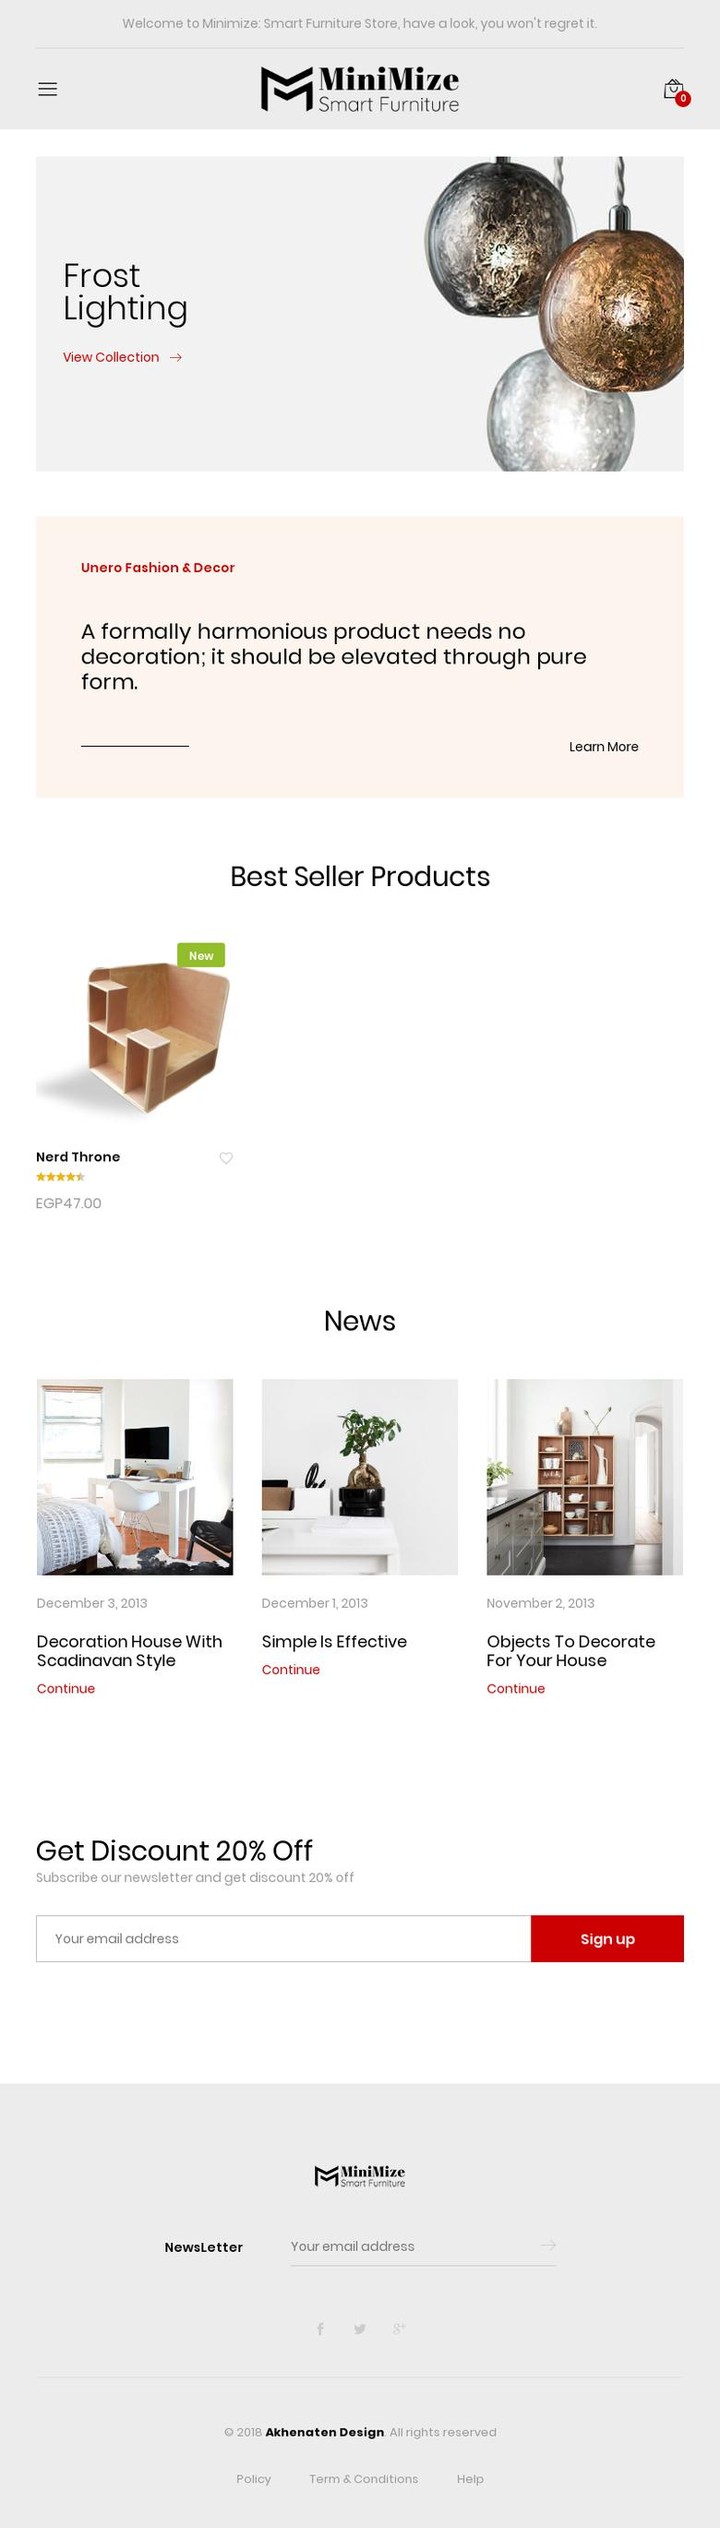 Minimize Furniture Website